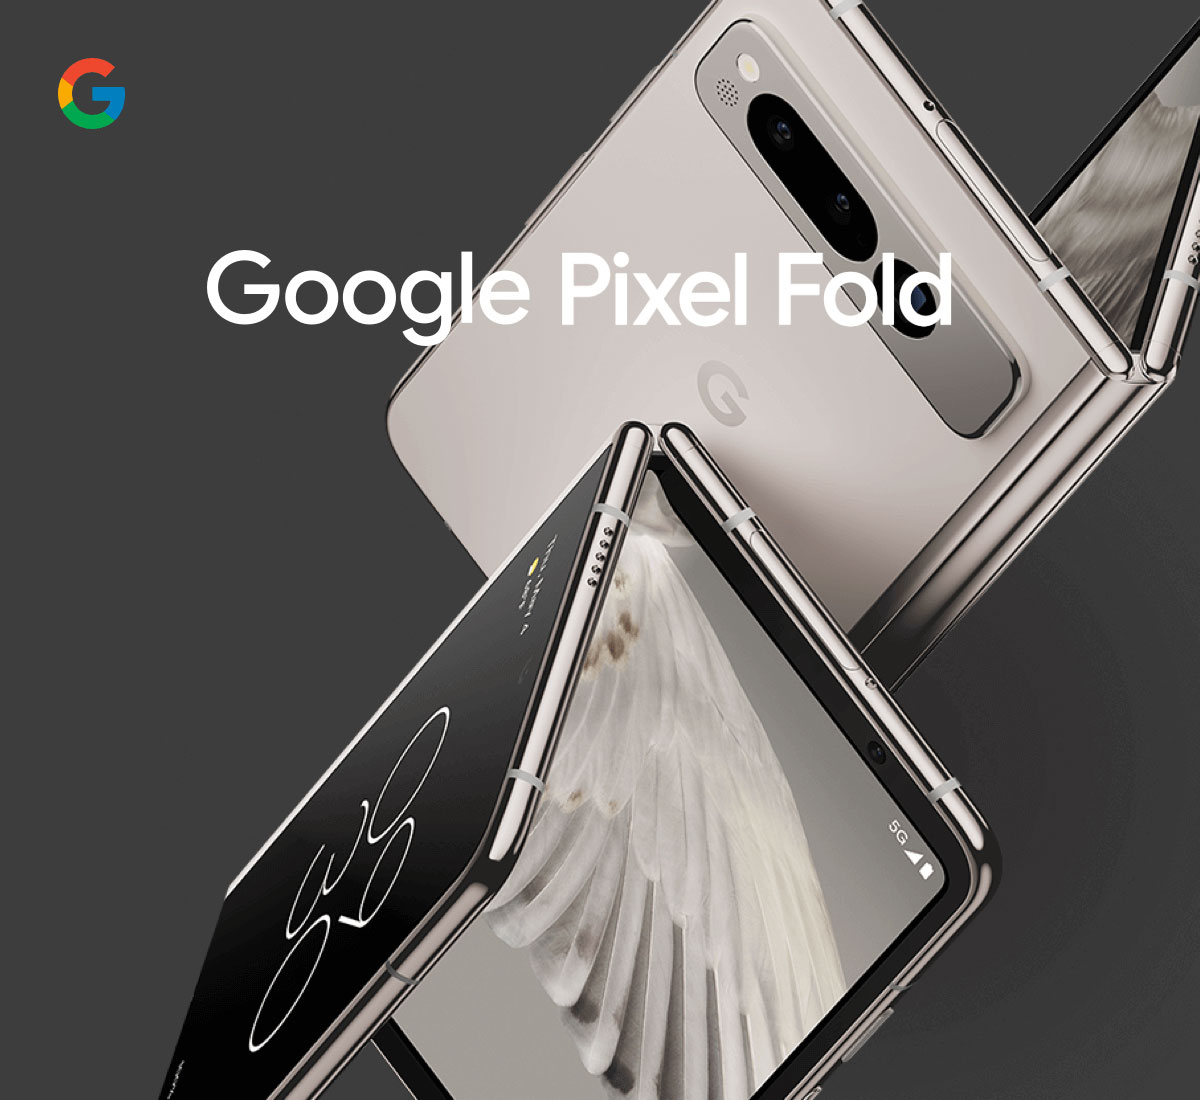 Google Pixel Fold graphic